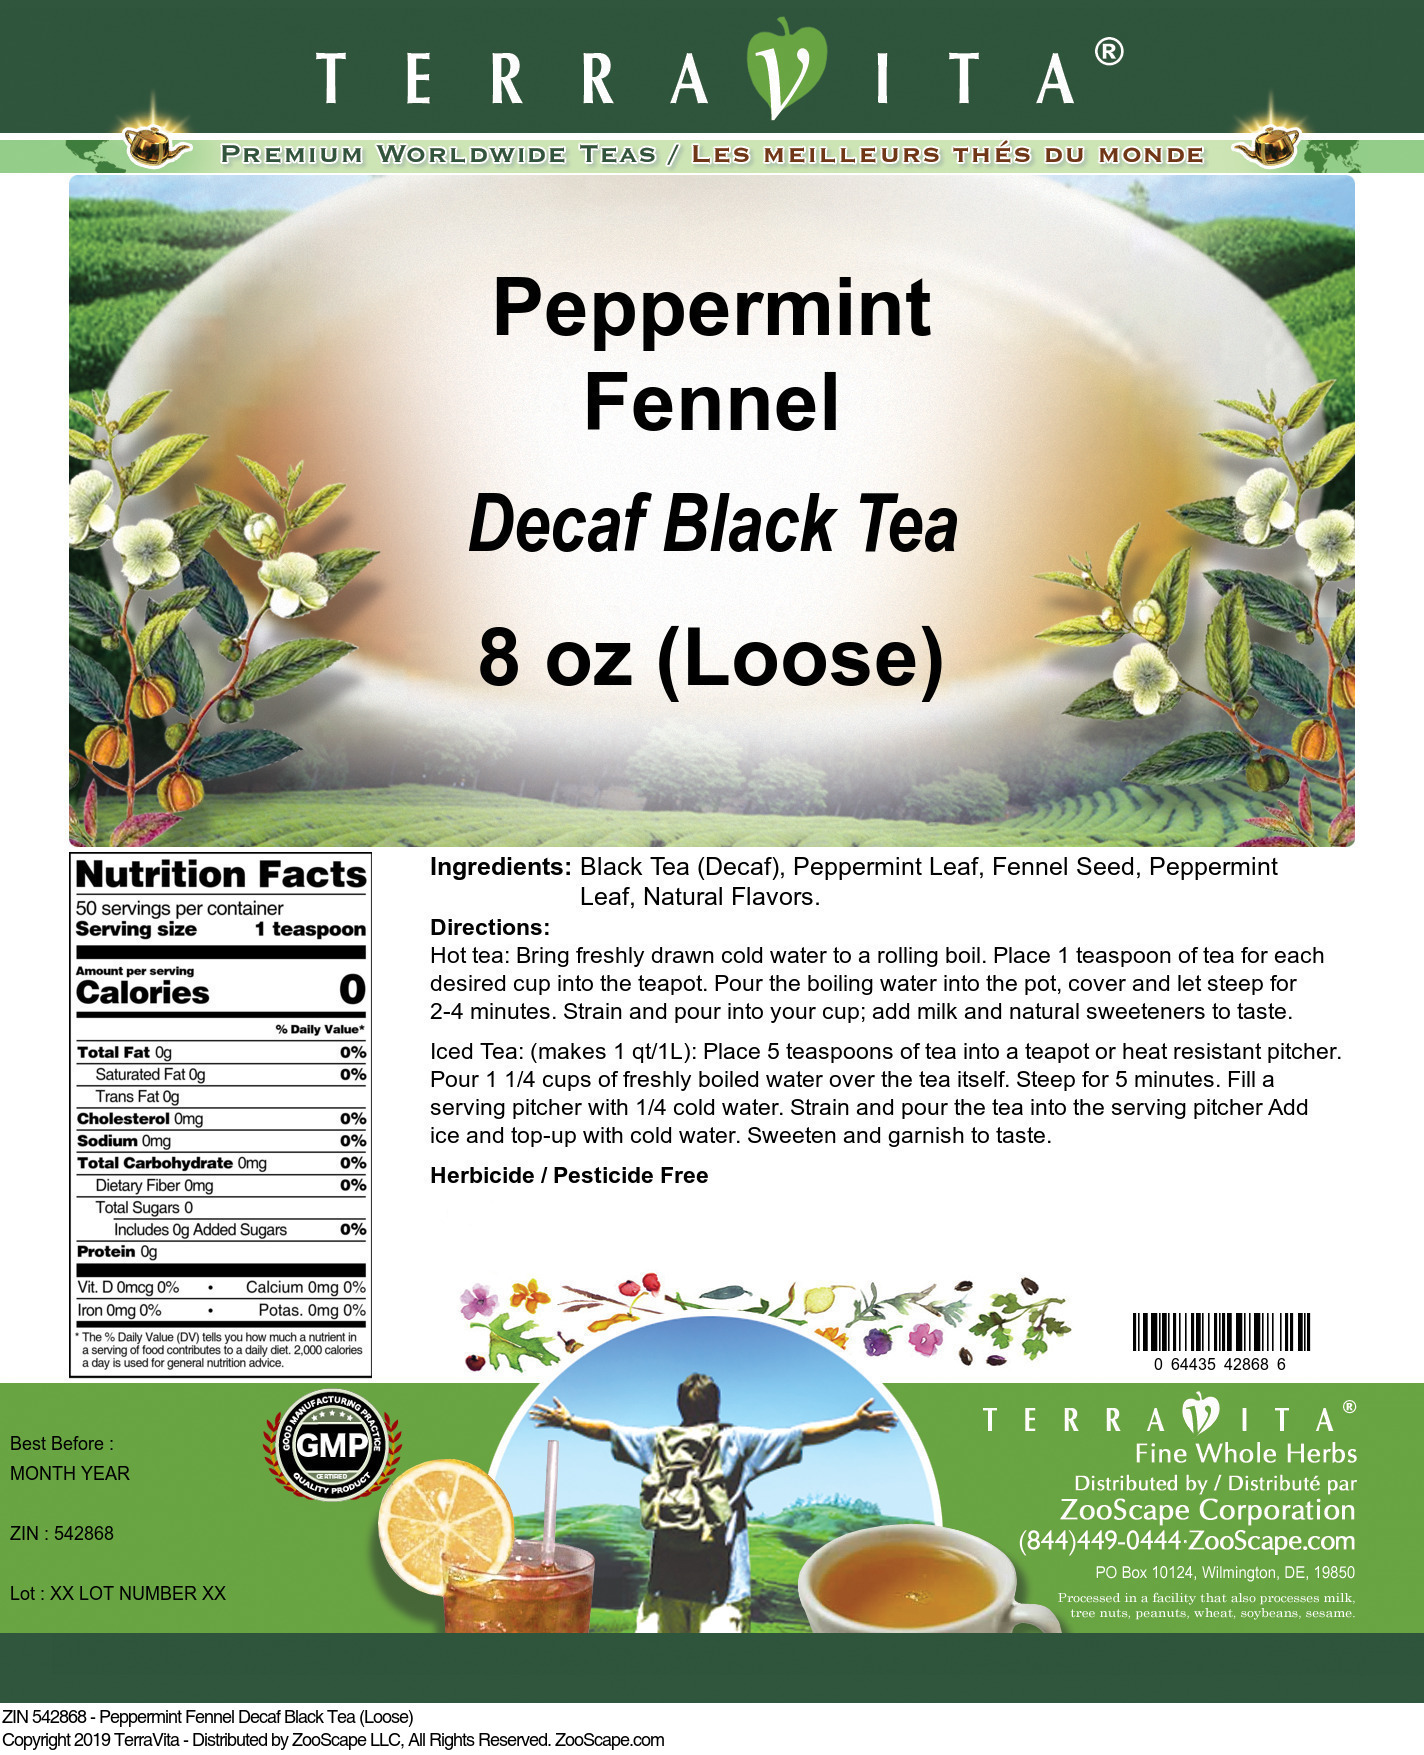 Peppermint Fennel Decaf Black Tea (Loose) - Label